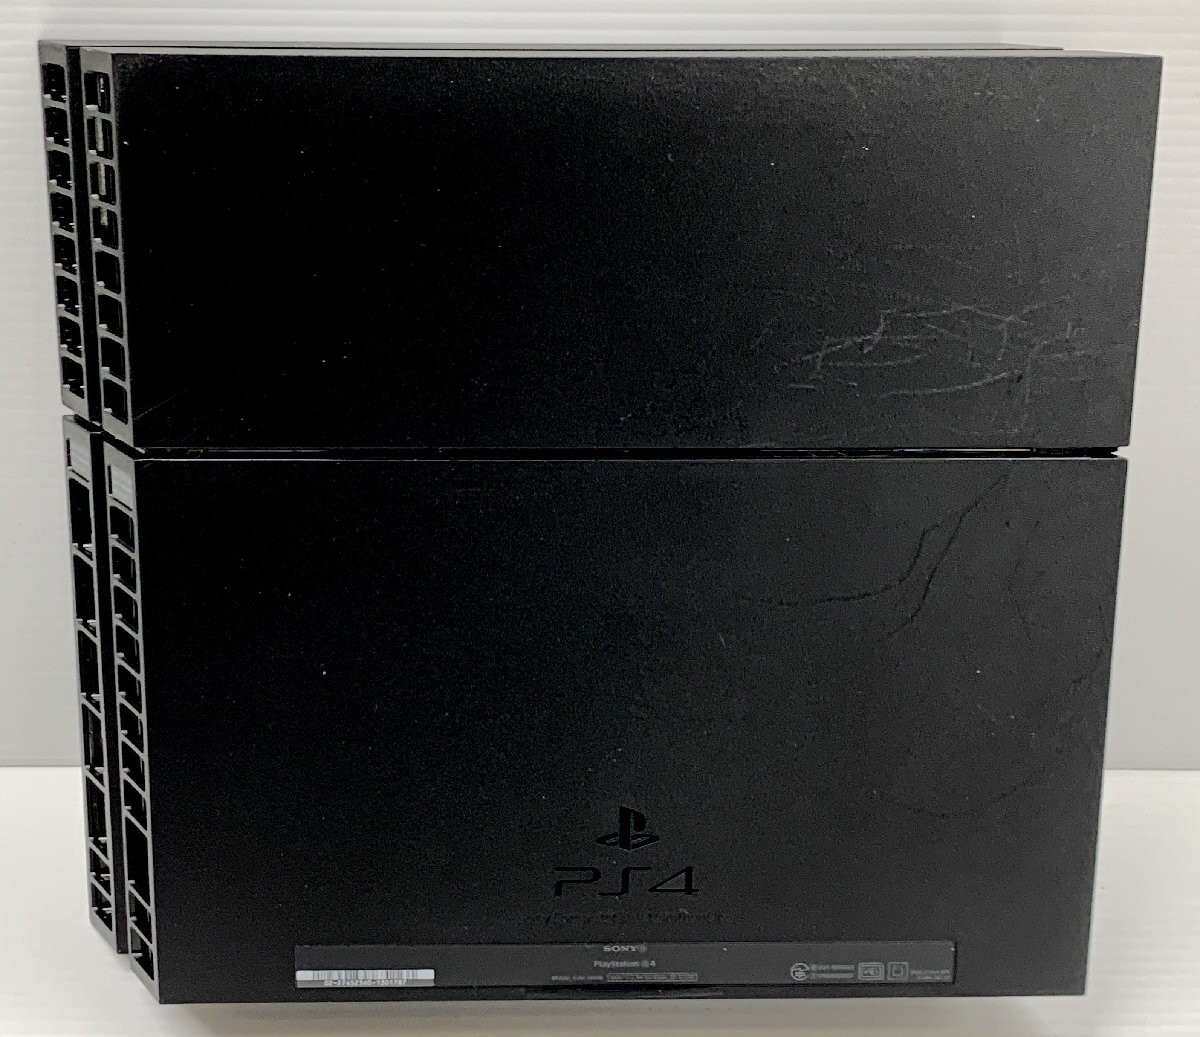 IZU【中古品】 SONY PlayStation4 プレイステーション4 PS4 本体 CUH-1200 1TB ジェット・ブラック 〈033-240417-AY-01-IZU〉の画像3